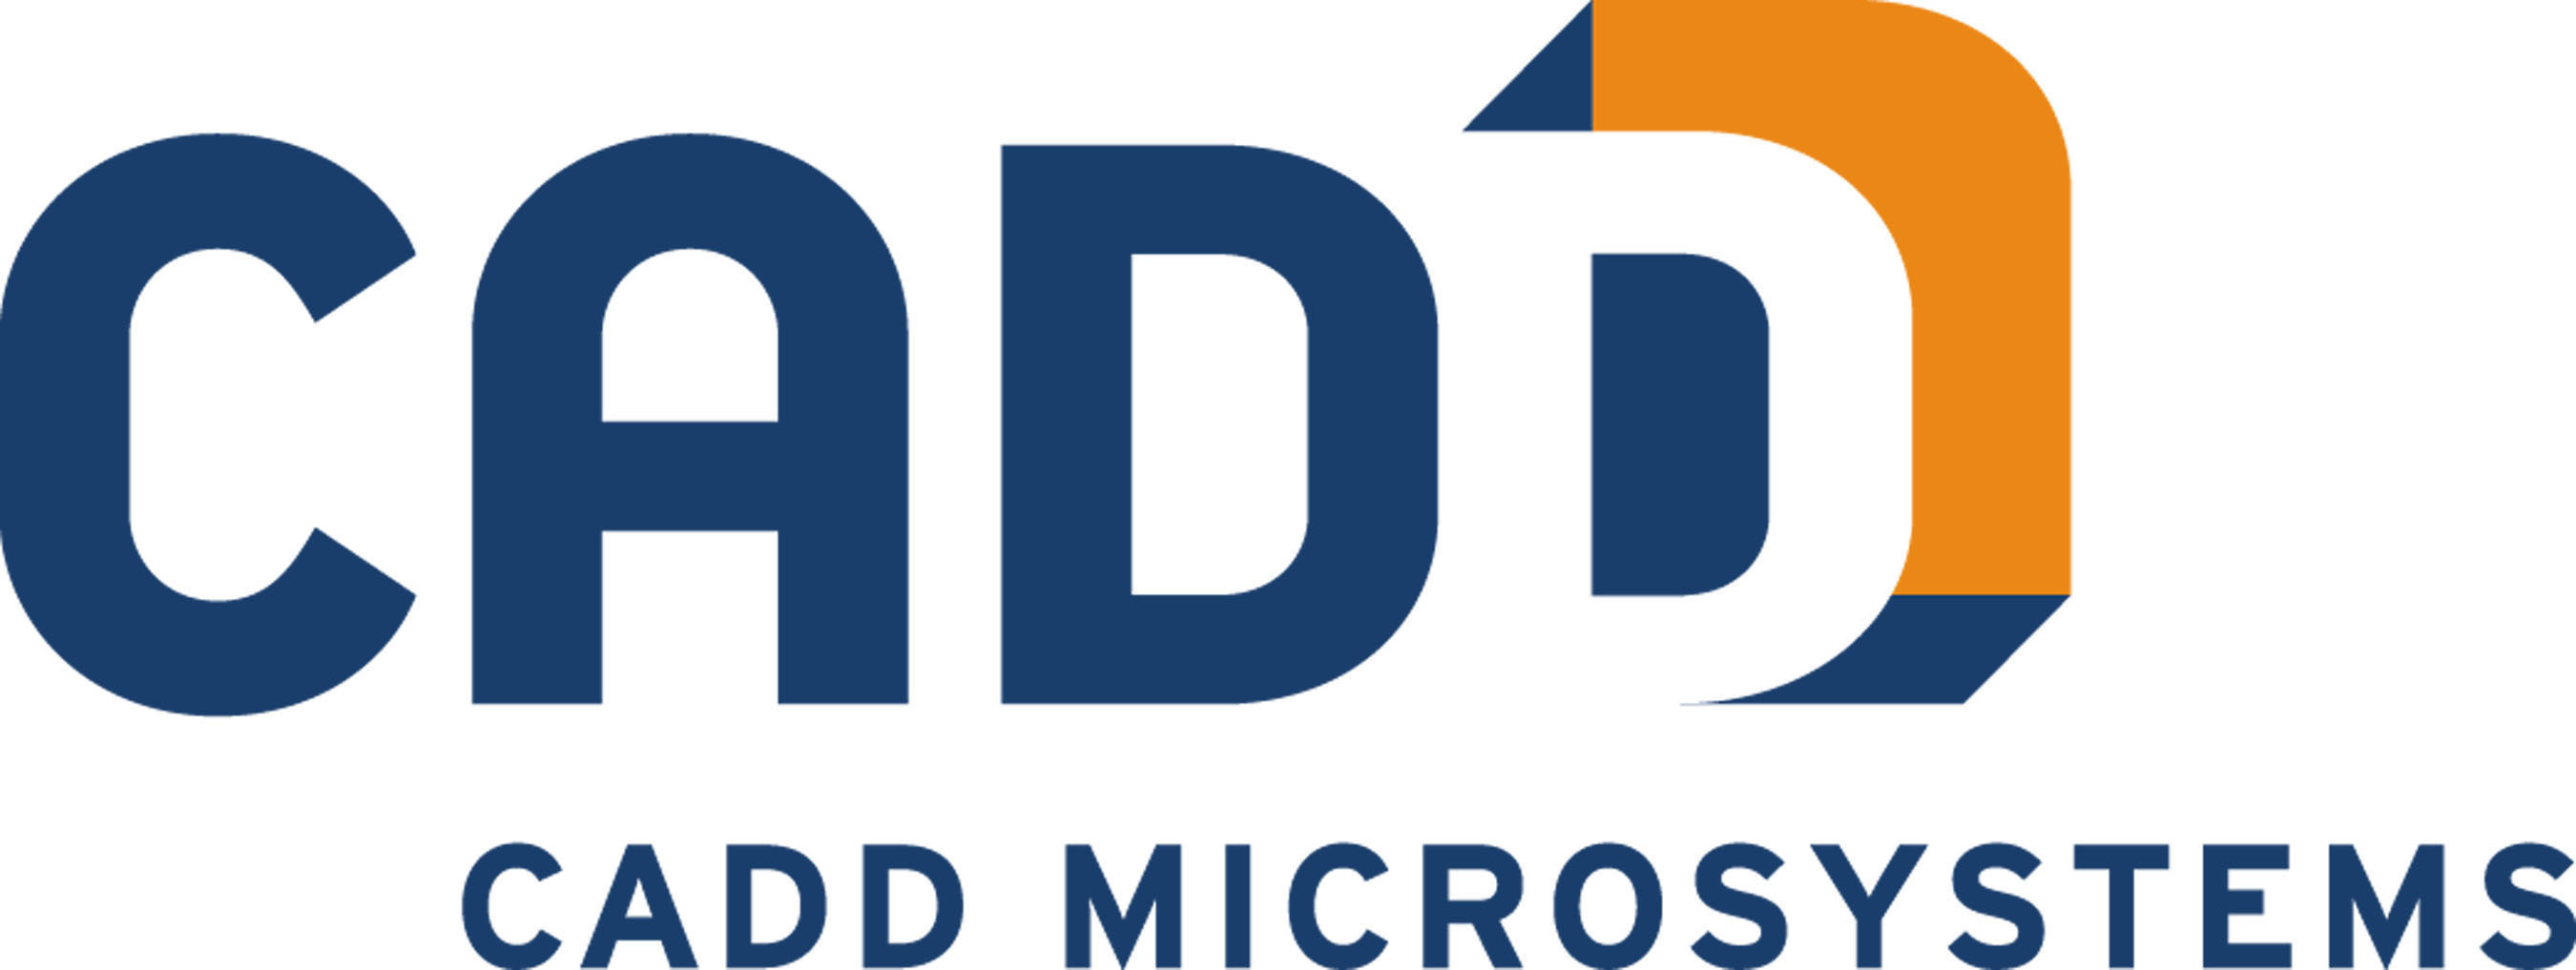 CADD Microsystems, an Autodesk Platinum Partner. (PRNewsFoto/CADD Microsystems) (PRNewsFoto/)